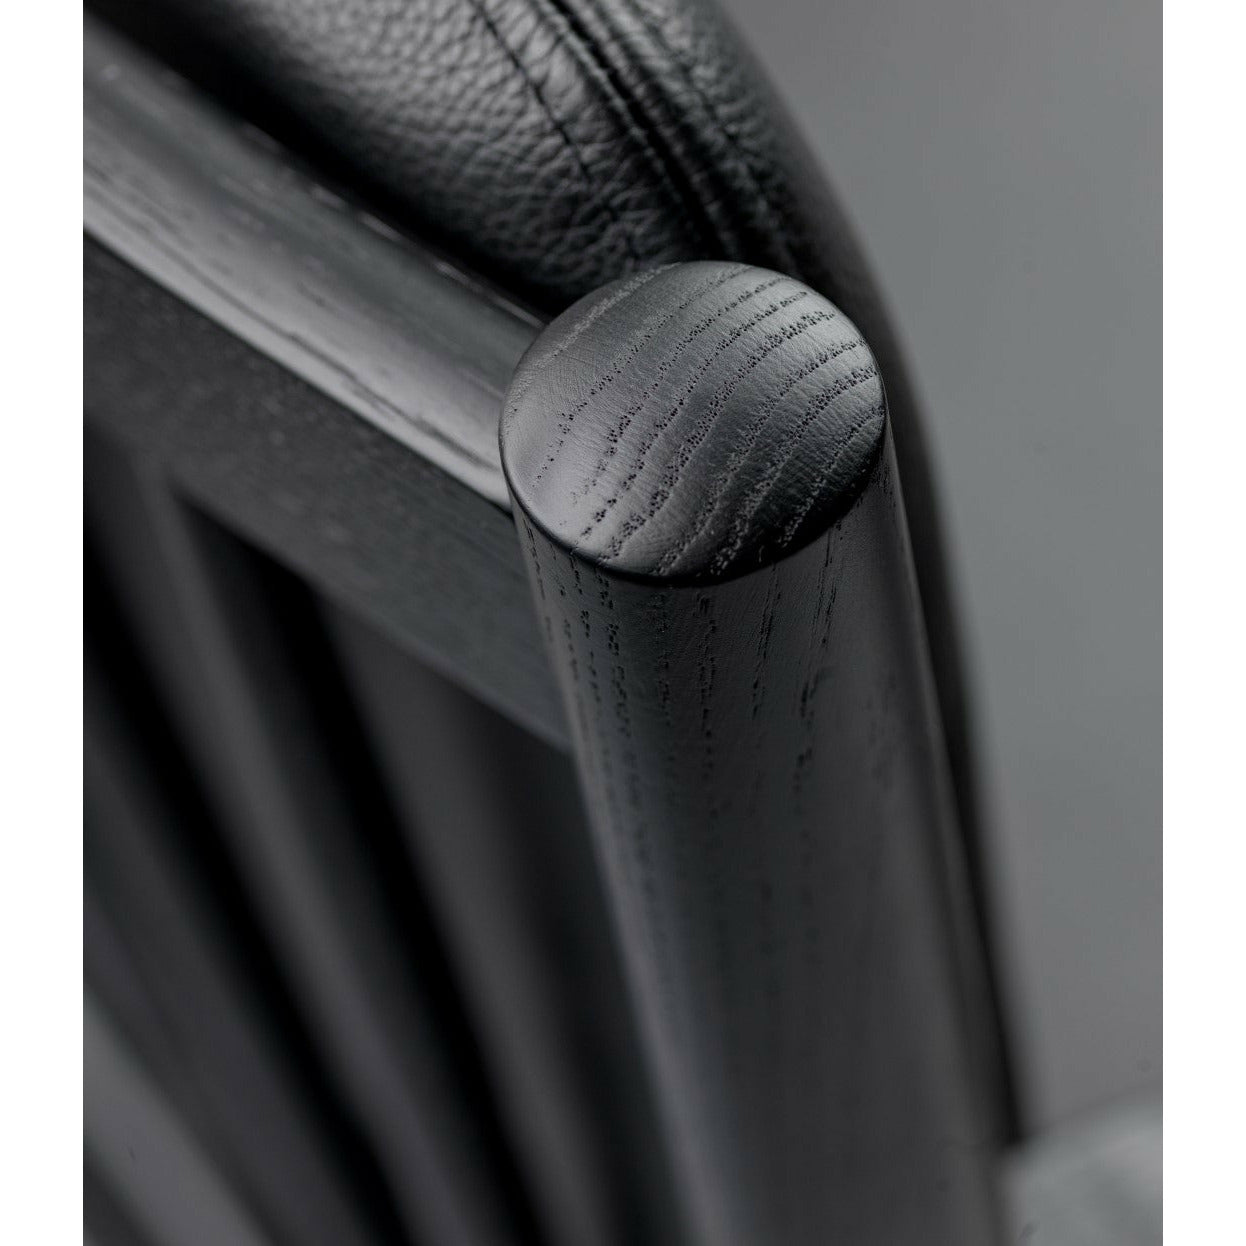 Fdb Møbler J147 Armchair, Black/Black